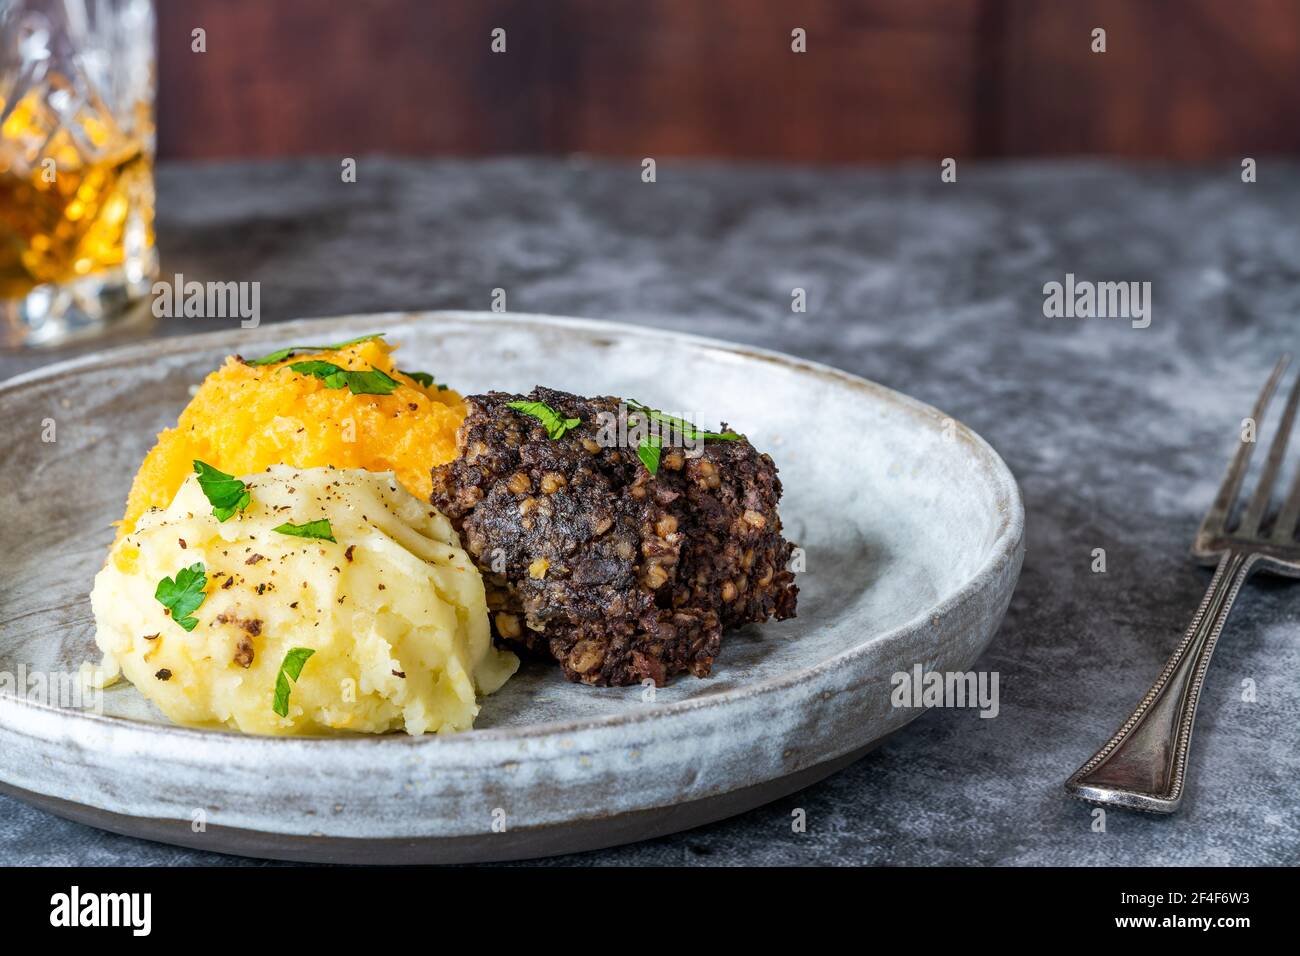 Haggis, neeps and tatties (haggis with turnips and potatoes) - traditional Scottish dish for Burns Night Stock Photo